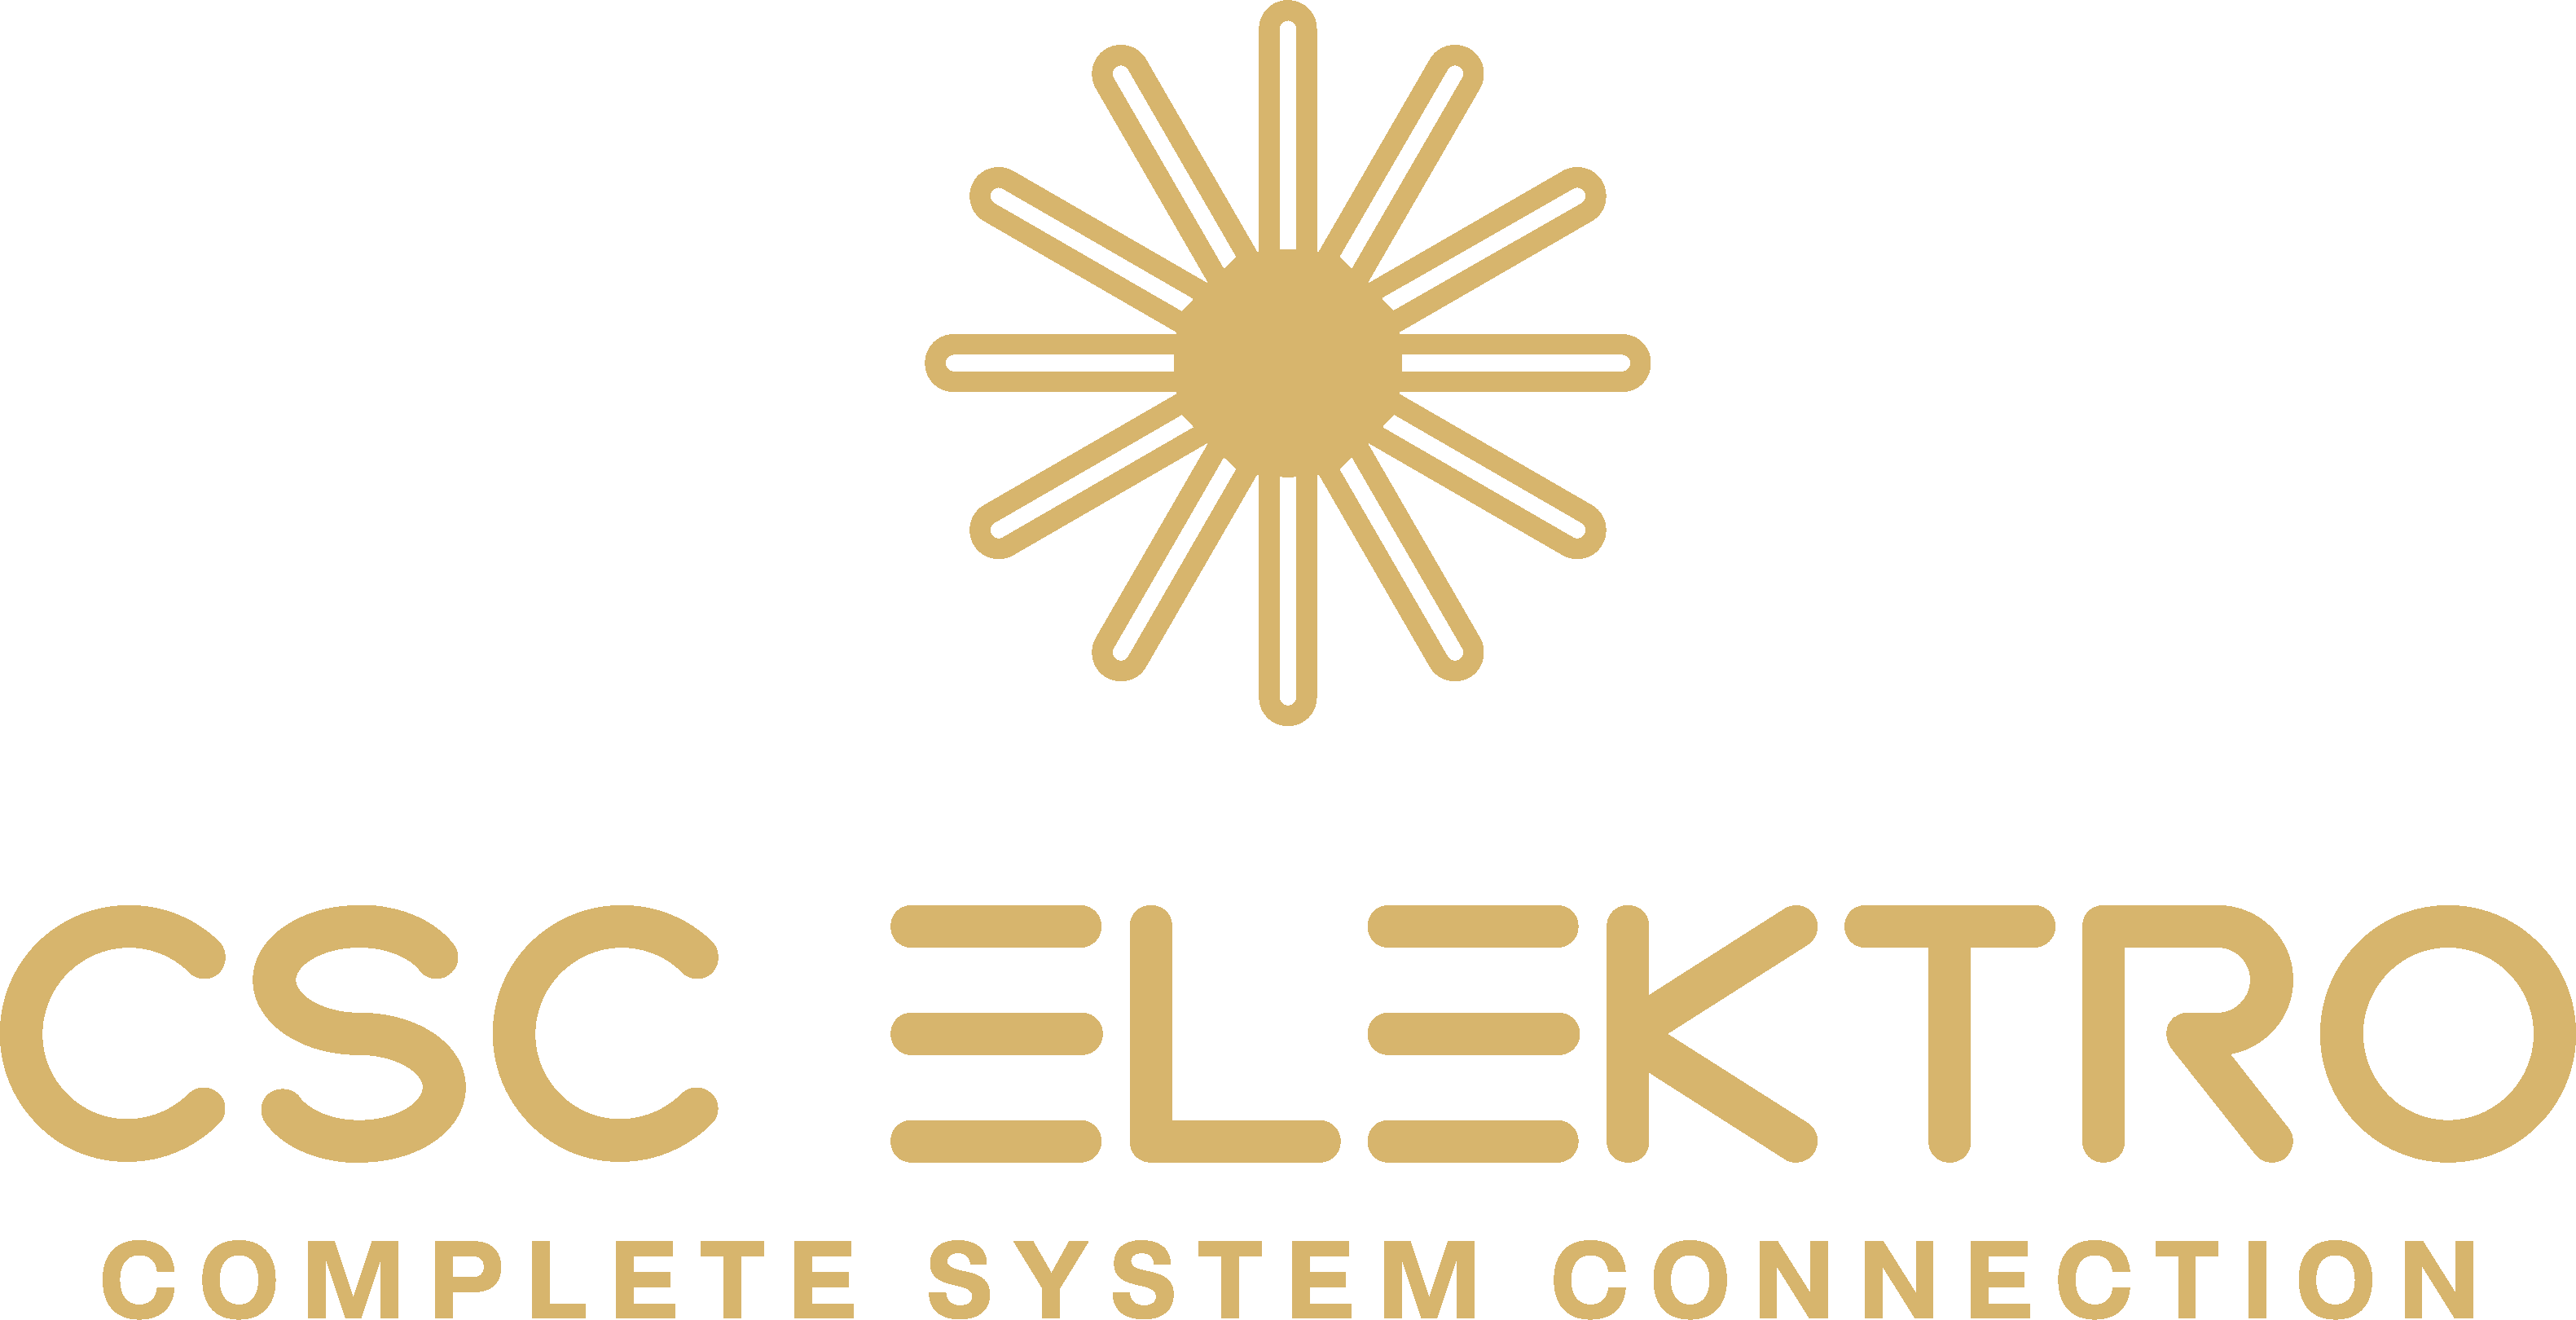 CSC-Elektro